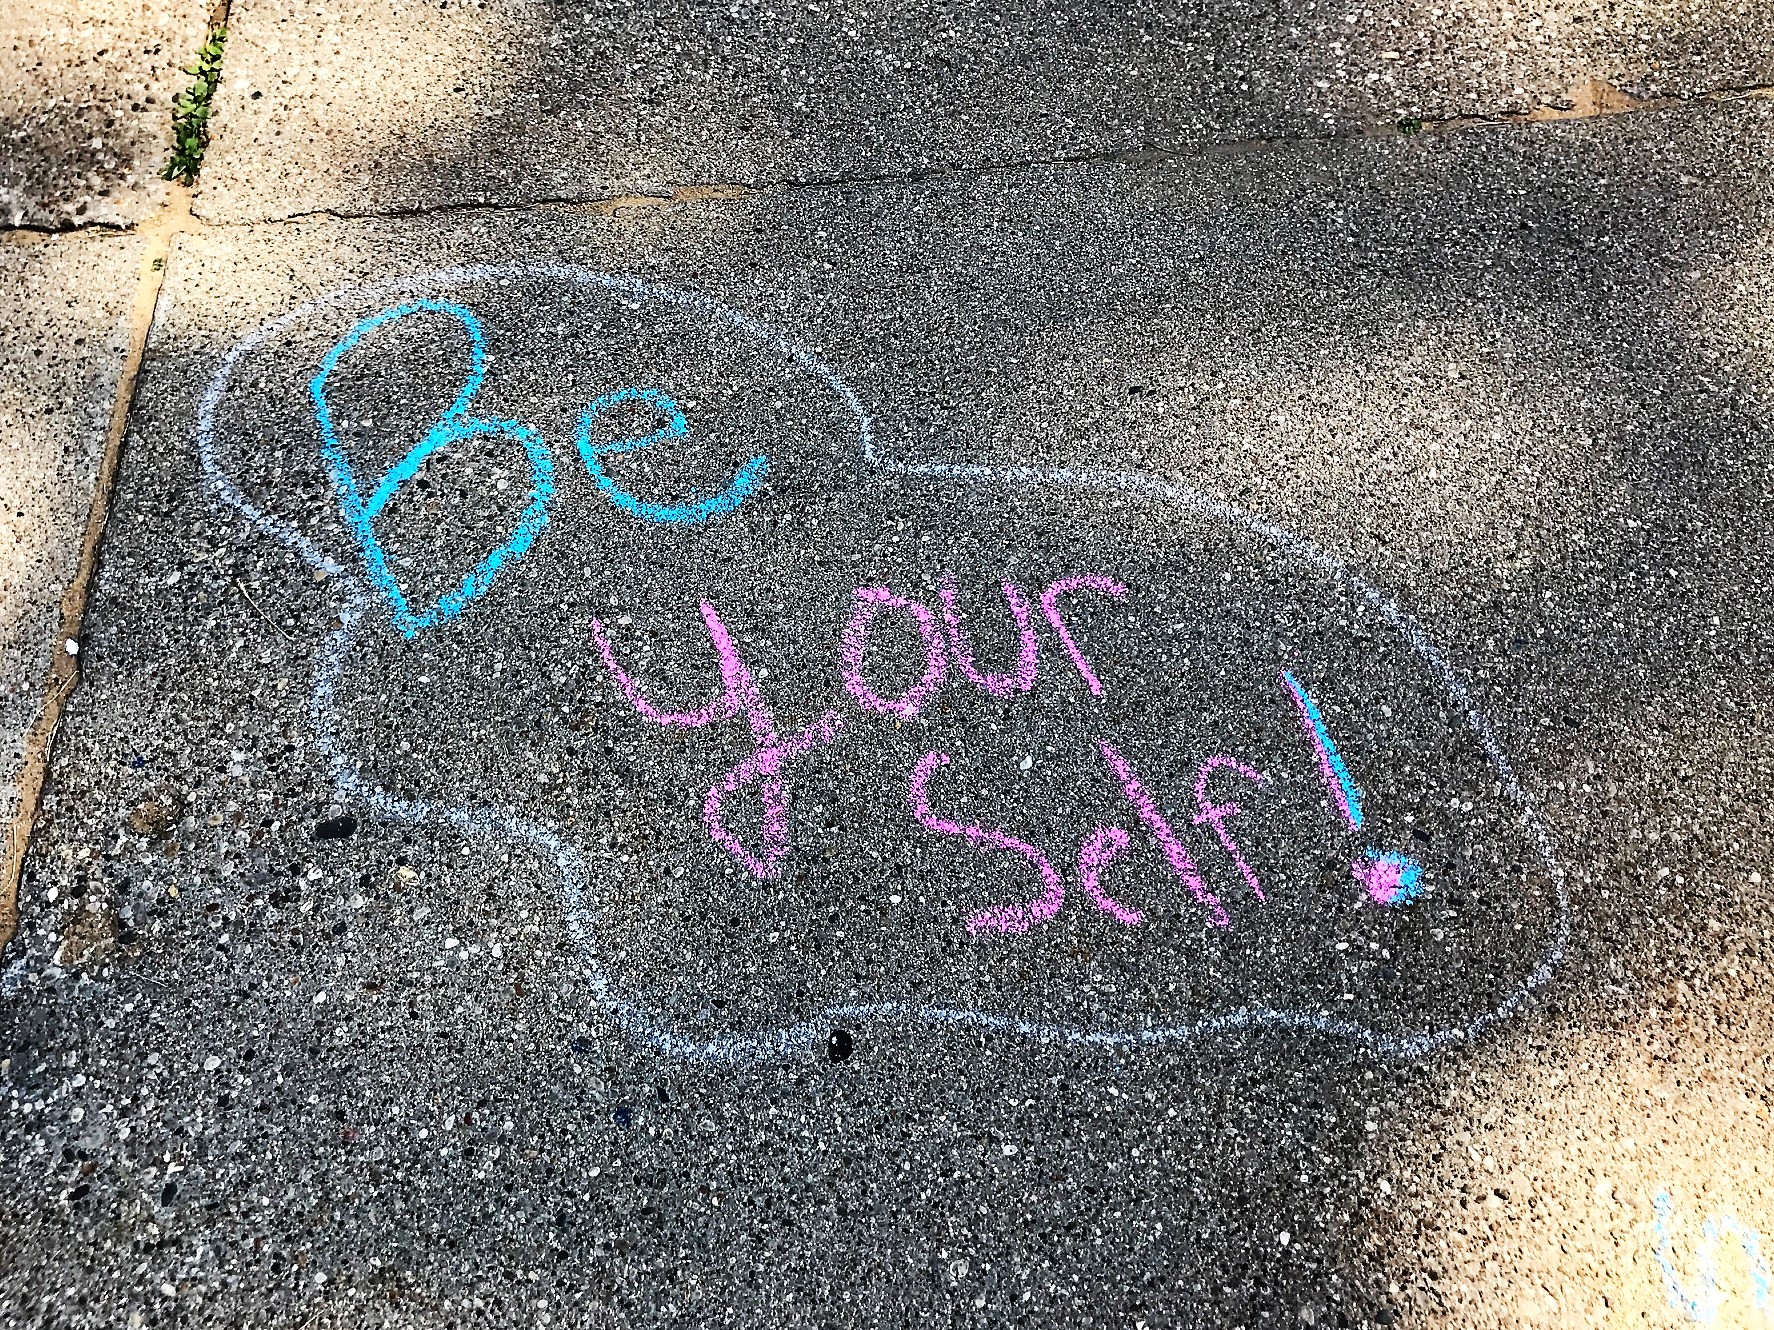 Chalk drawing on sidewalk, "Be yourself!"